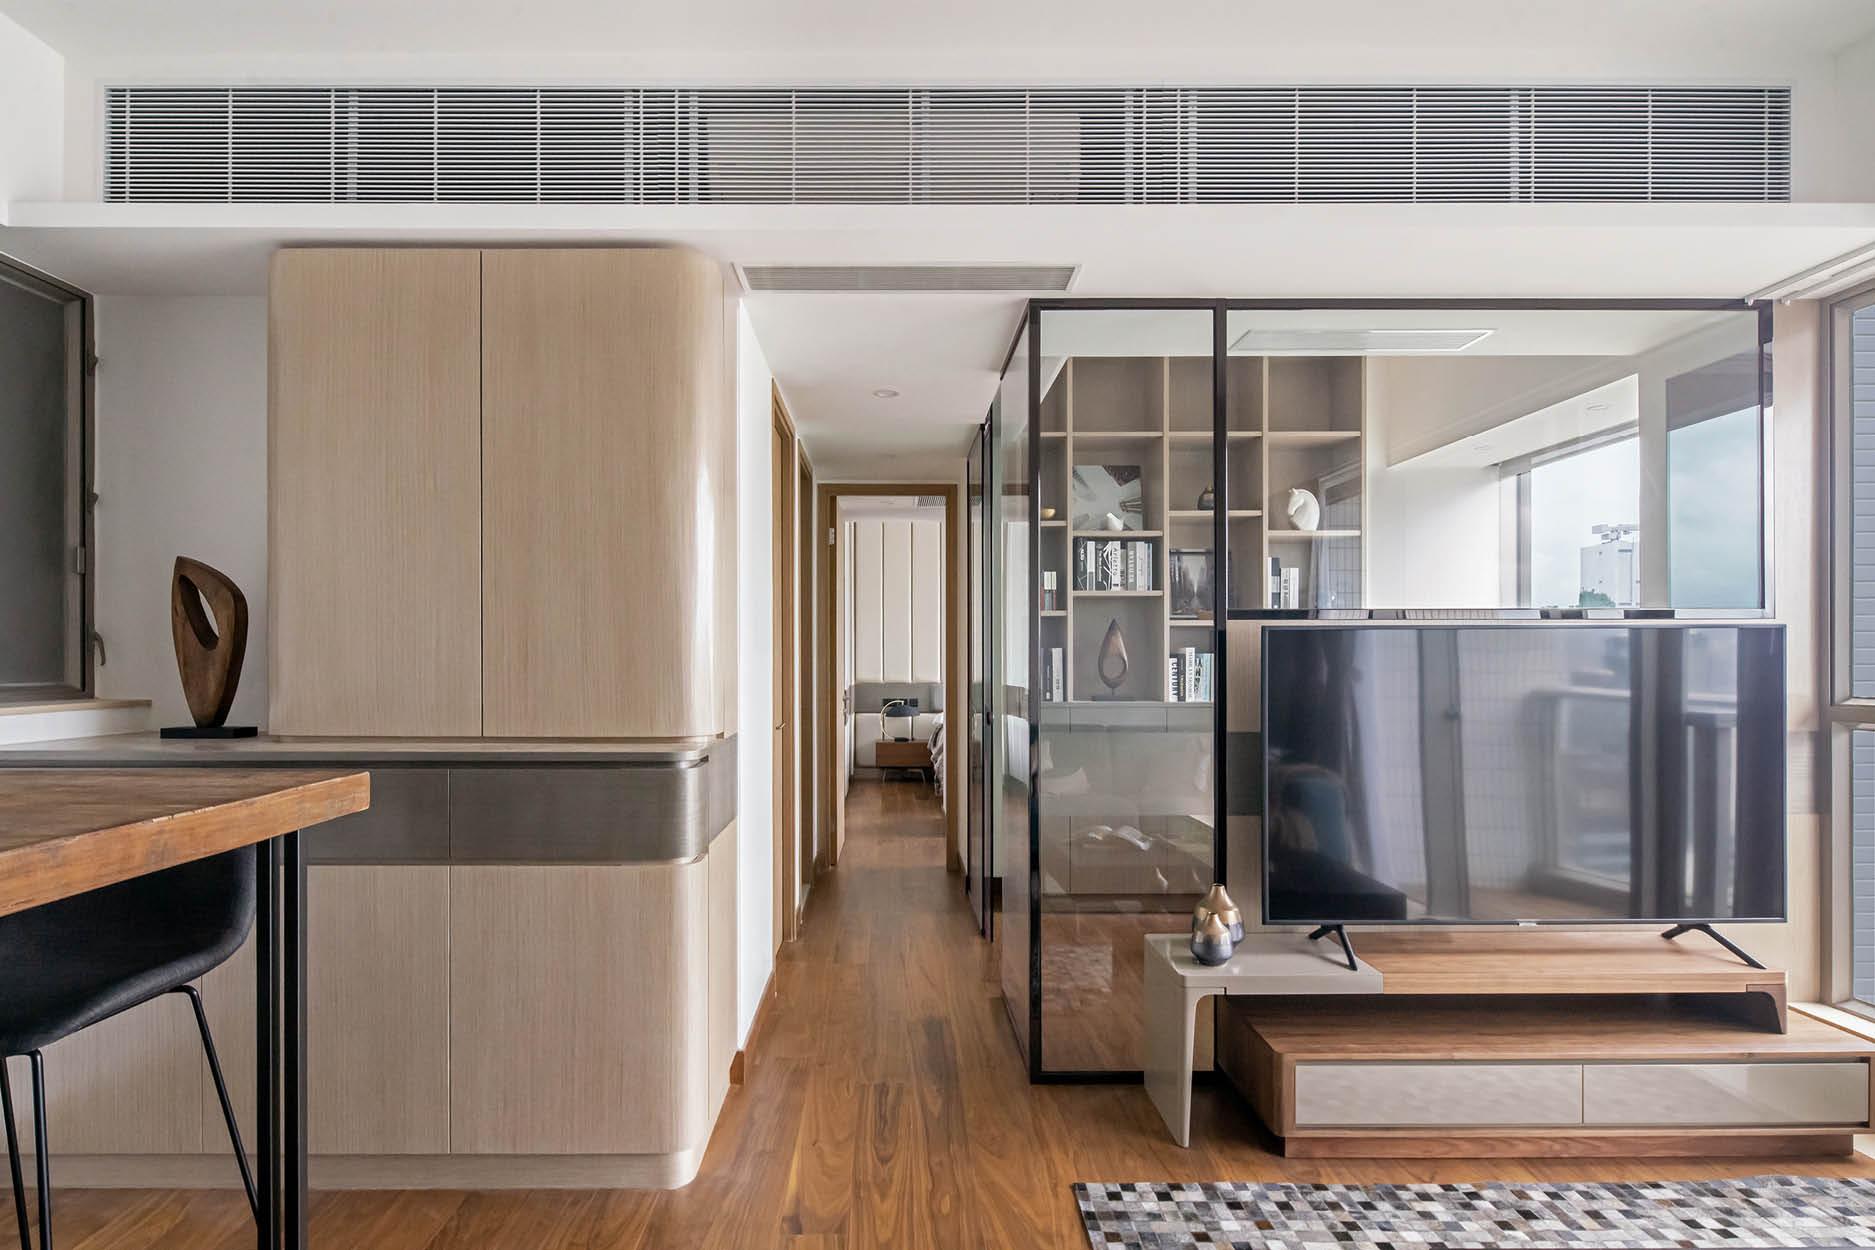 Step Inside a 760sqft Hong Kong Abode Designed for a Couple